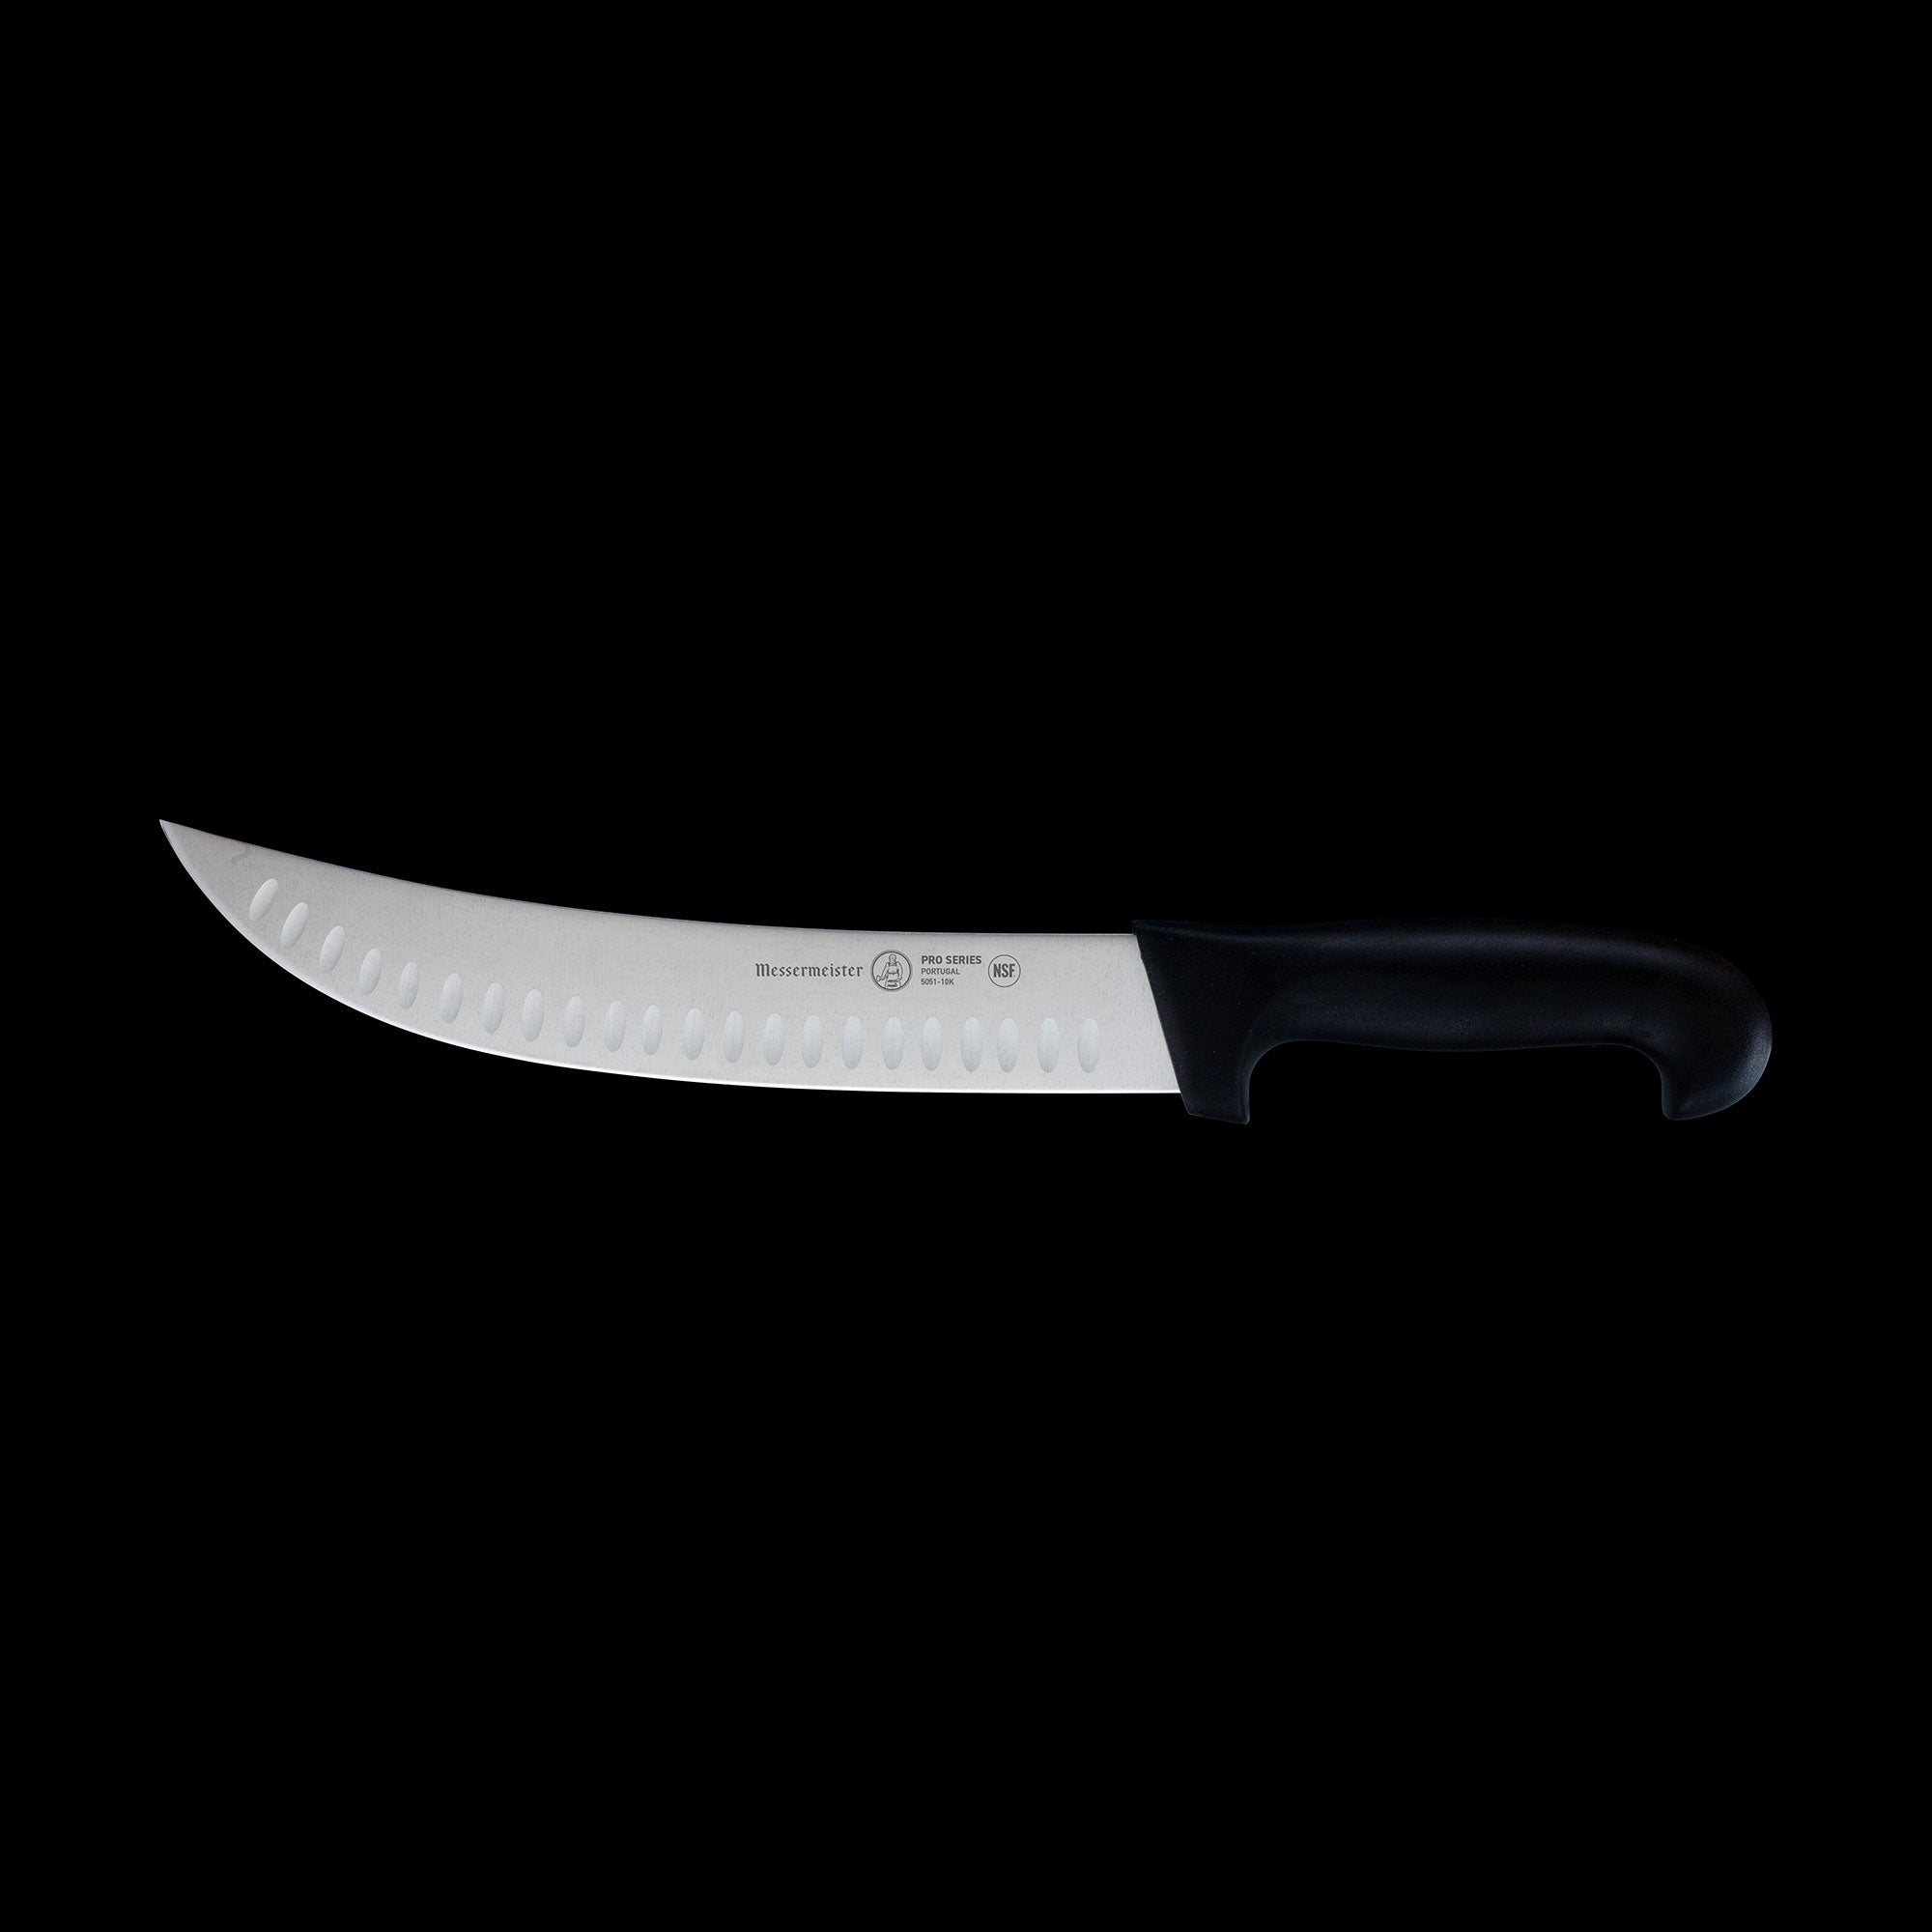  Update International (KGE-10) 11 Forged Cimeter Knife : Home &  Kitchen